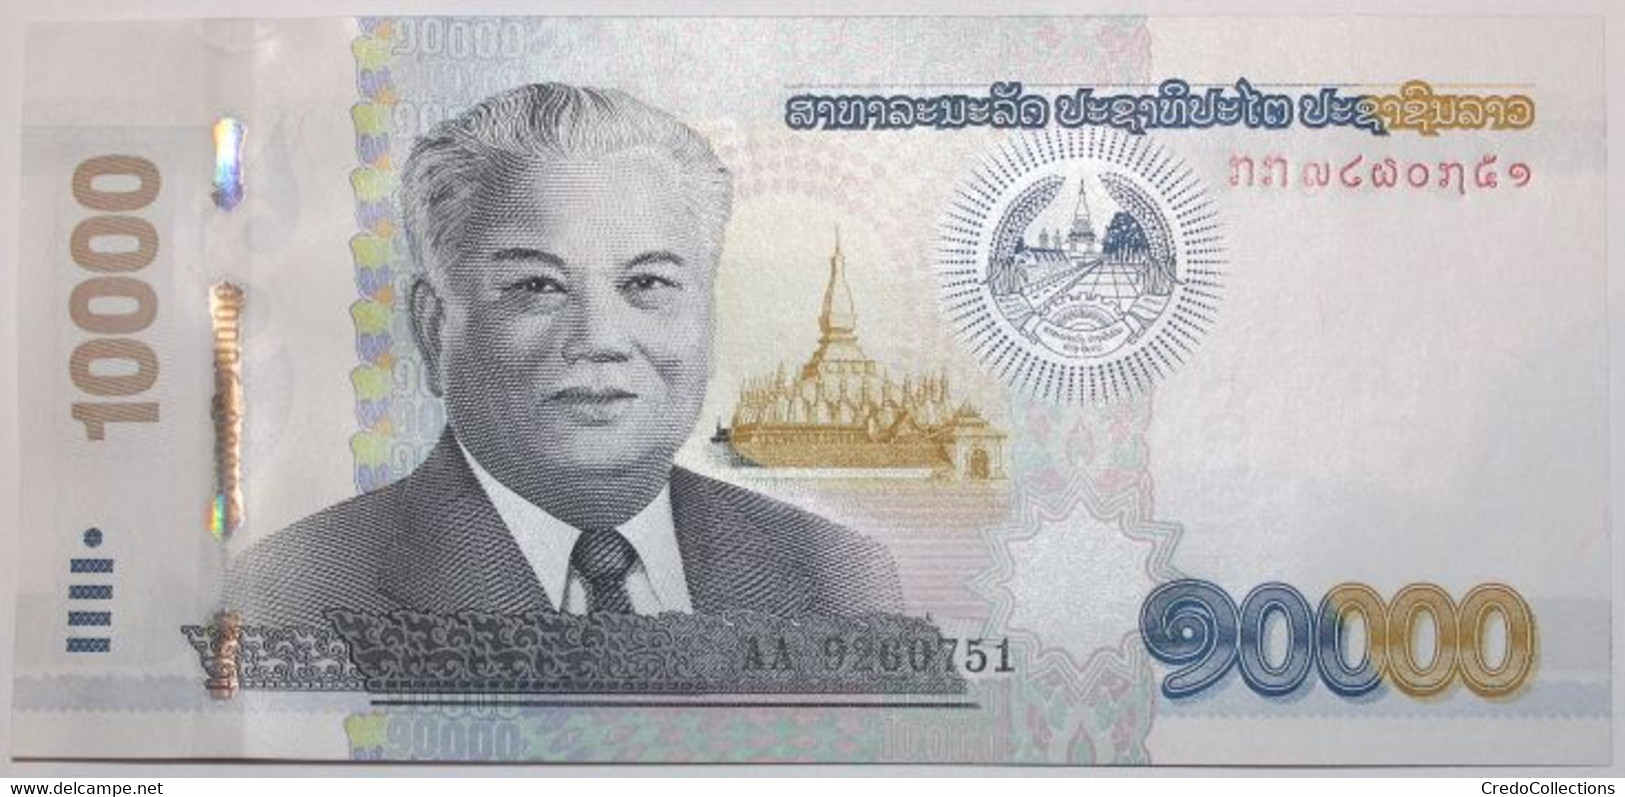 Laos - 10000 Kip - 2020 - PICK 41B - NEUF - Laos